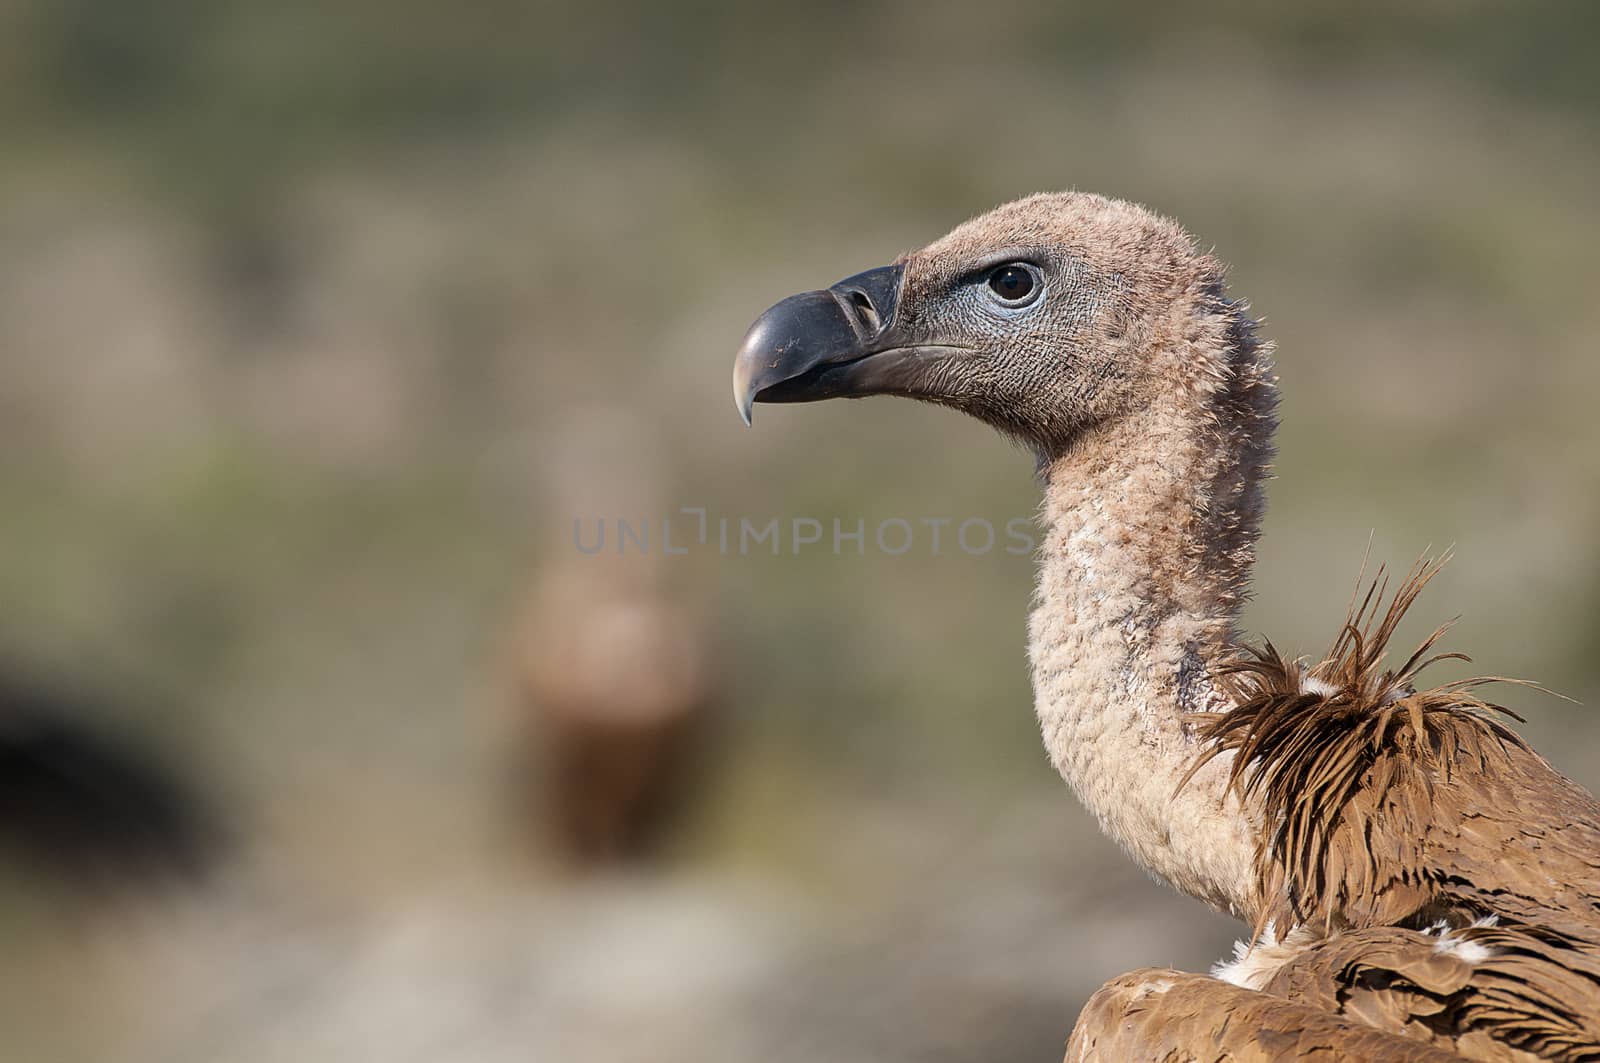 Griffon Vulture (Gyps fulvus) close-up, eyes and beak  by jalonsohu@gmail.com